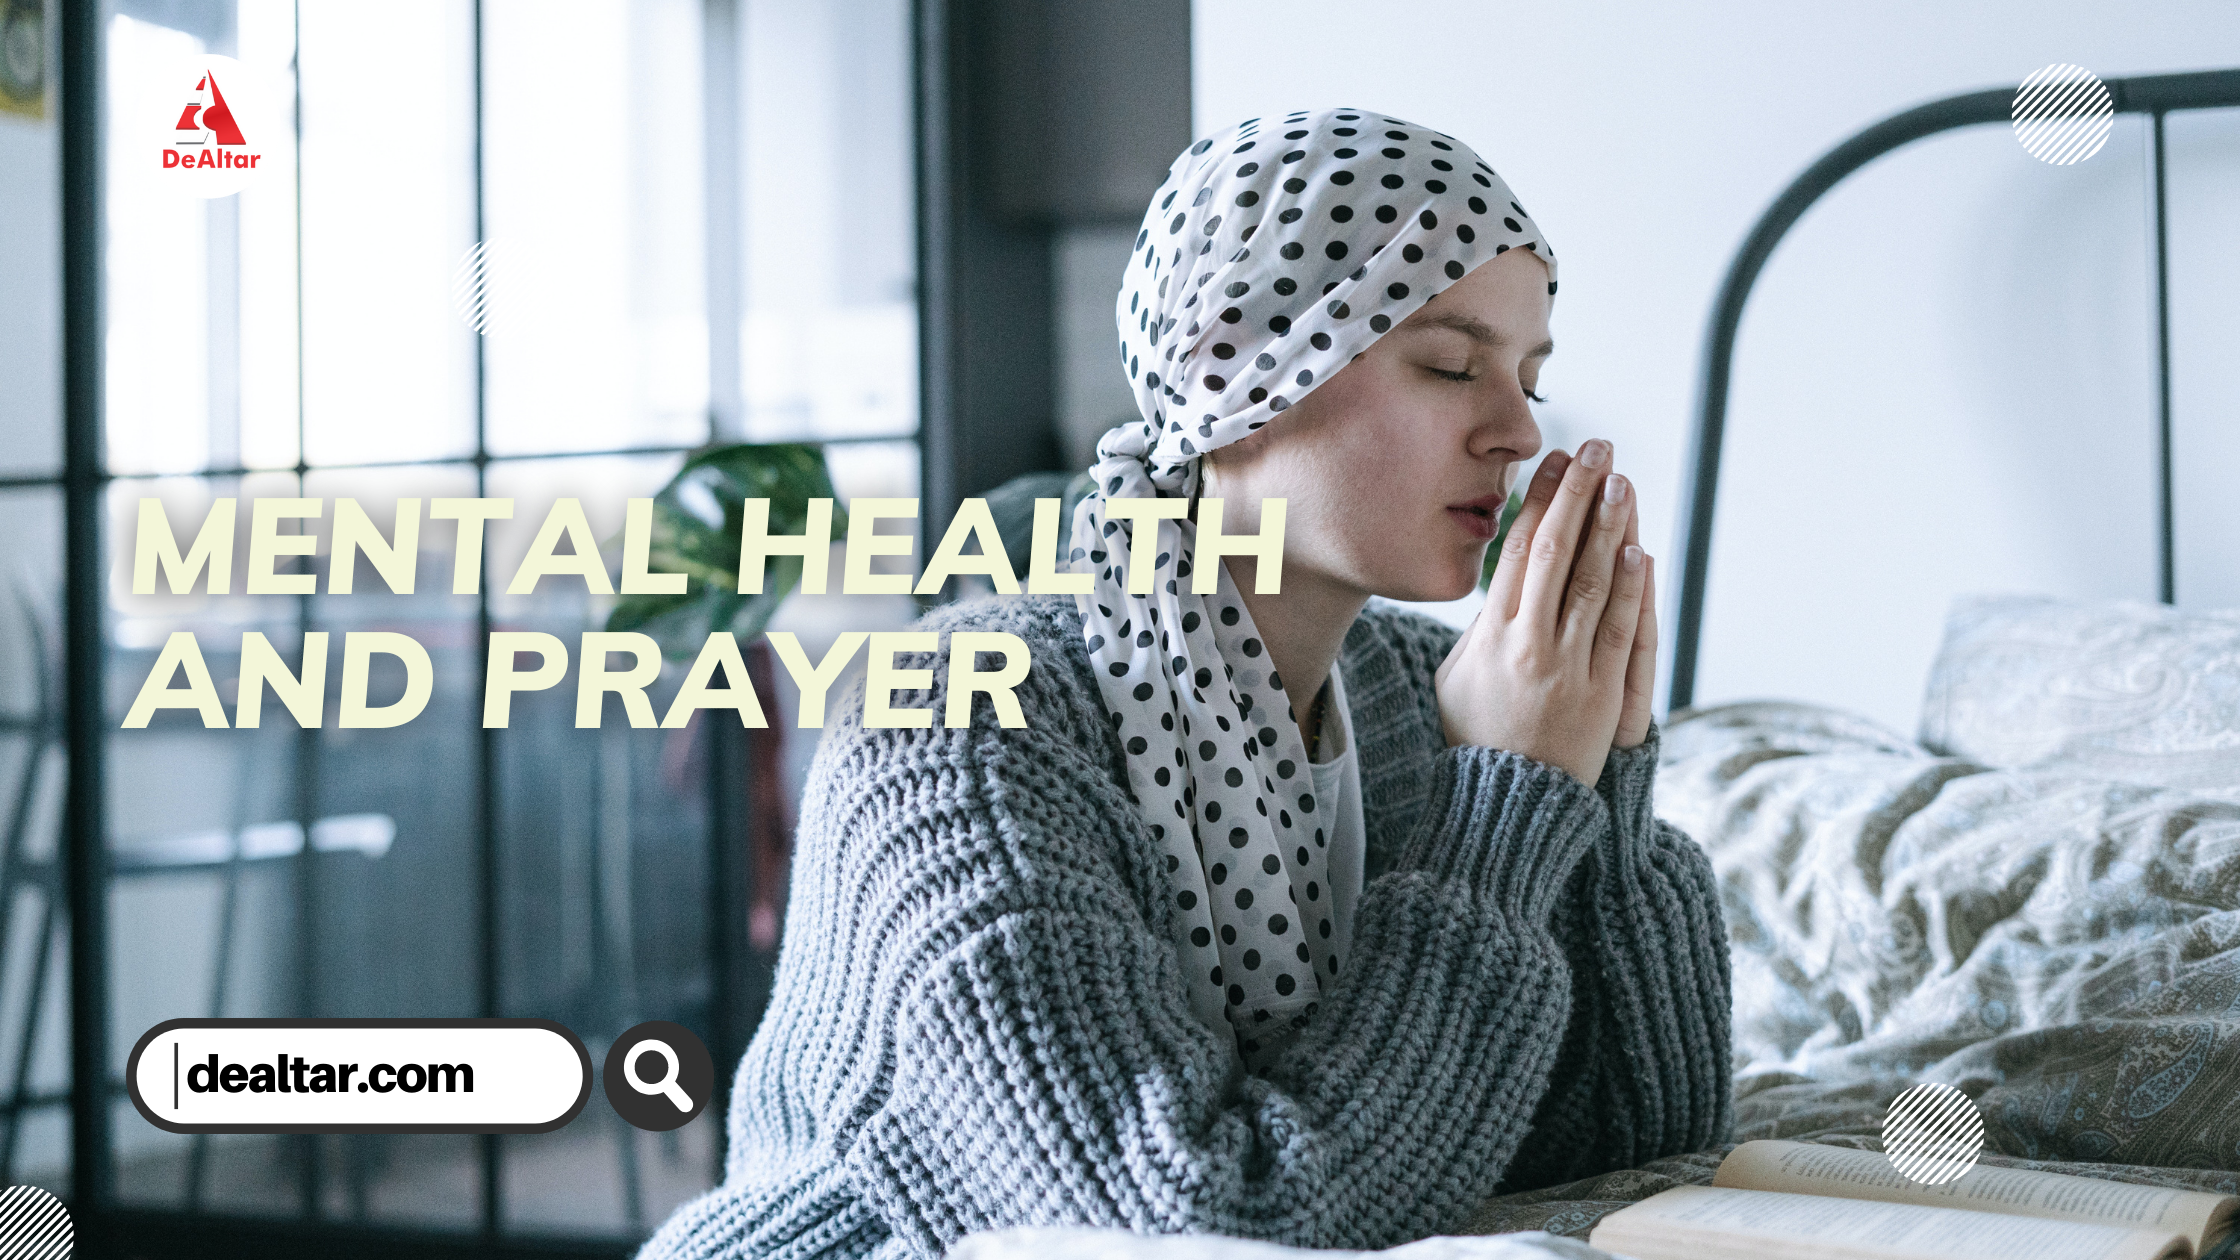 MENTAL HEALTH AND PRAYER